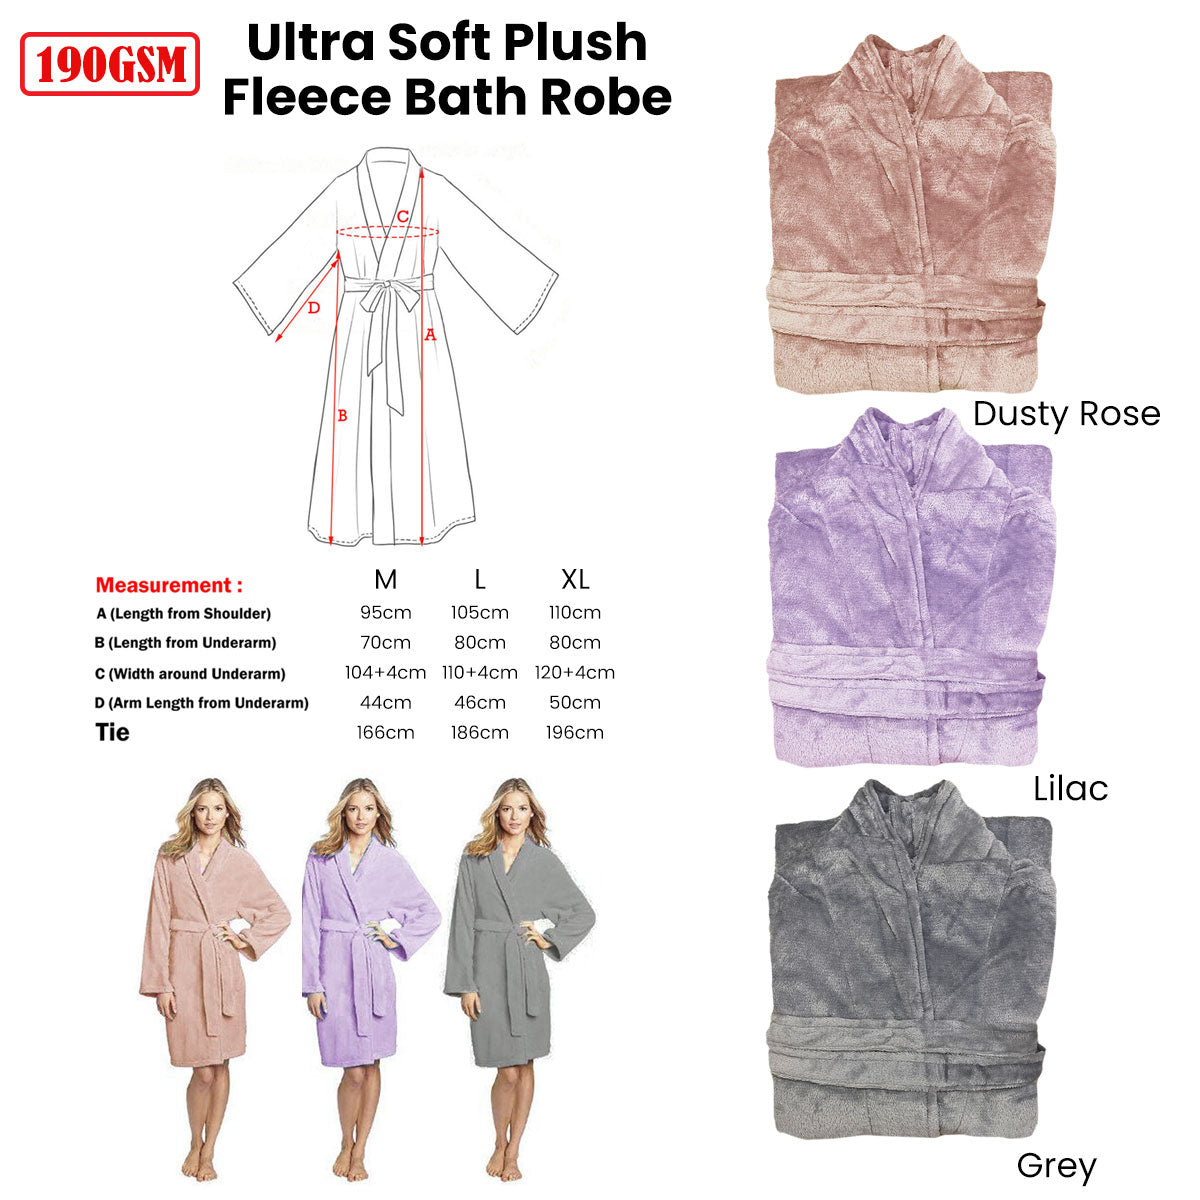 190GSM Ultra Soft Plush Fleece Bath Robe Dusty Rose L